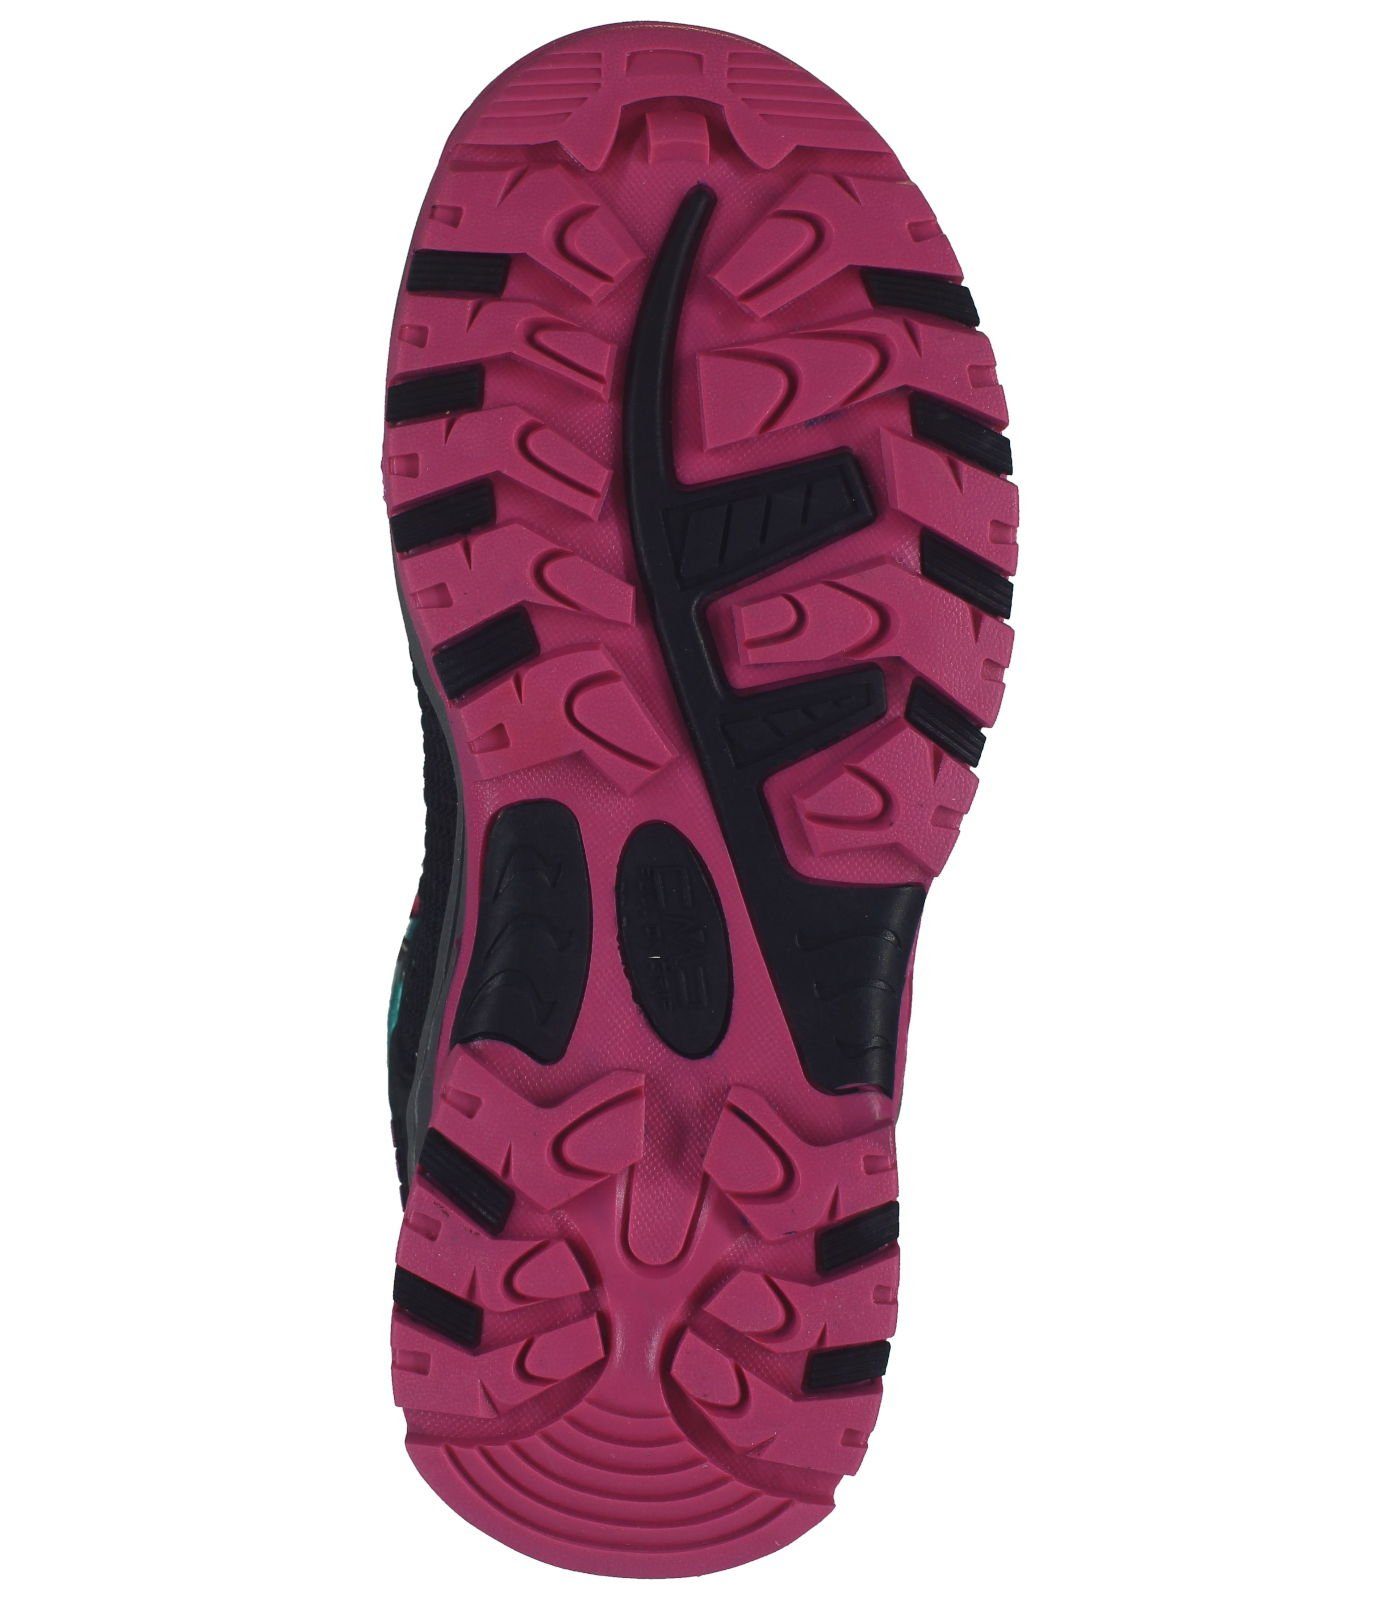 CMP Winterstiefel Schwarz Leder/Textil Boots Pink